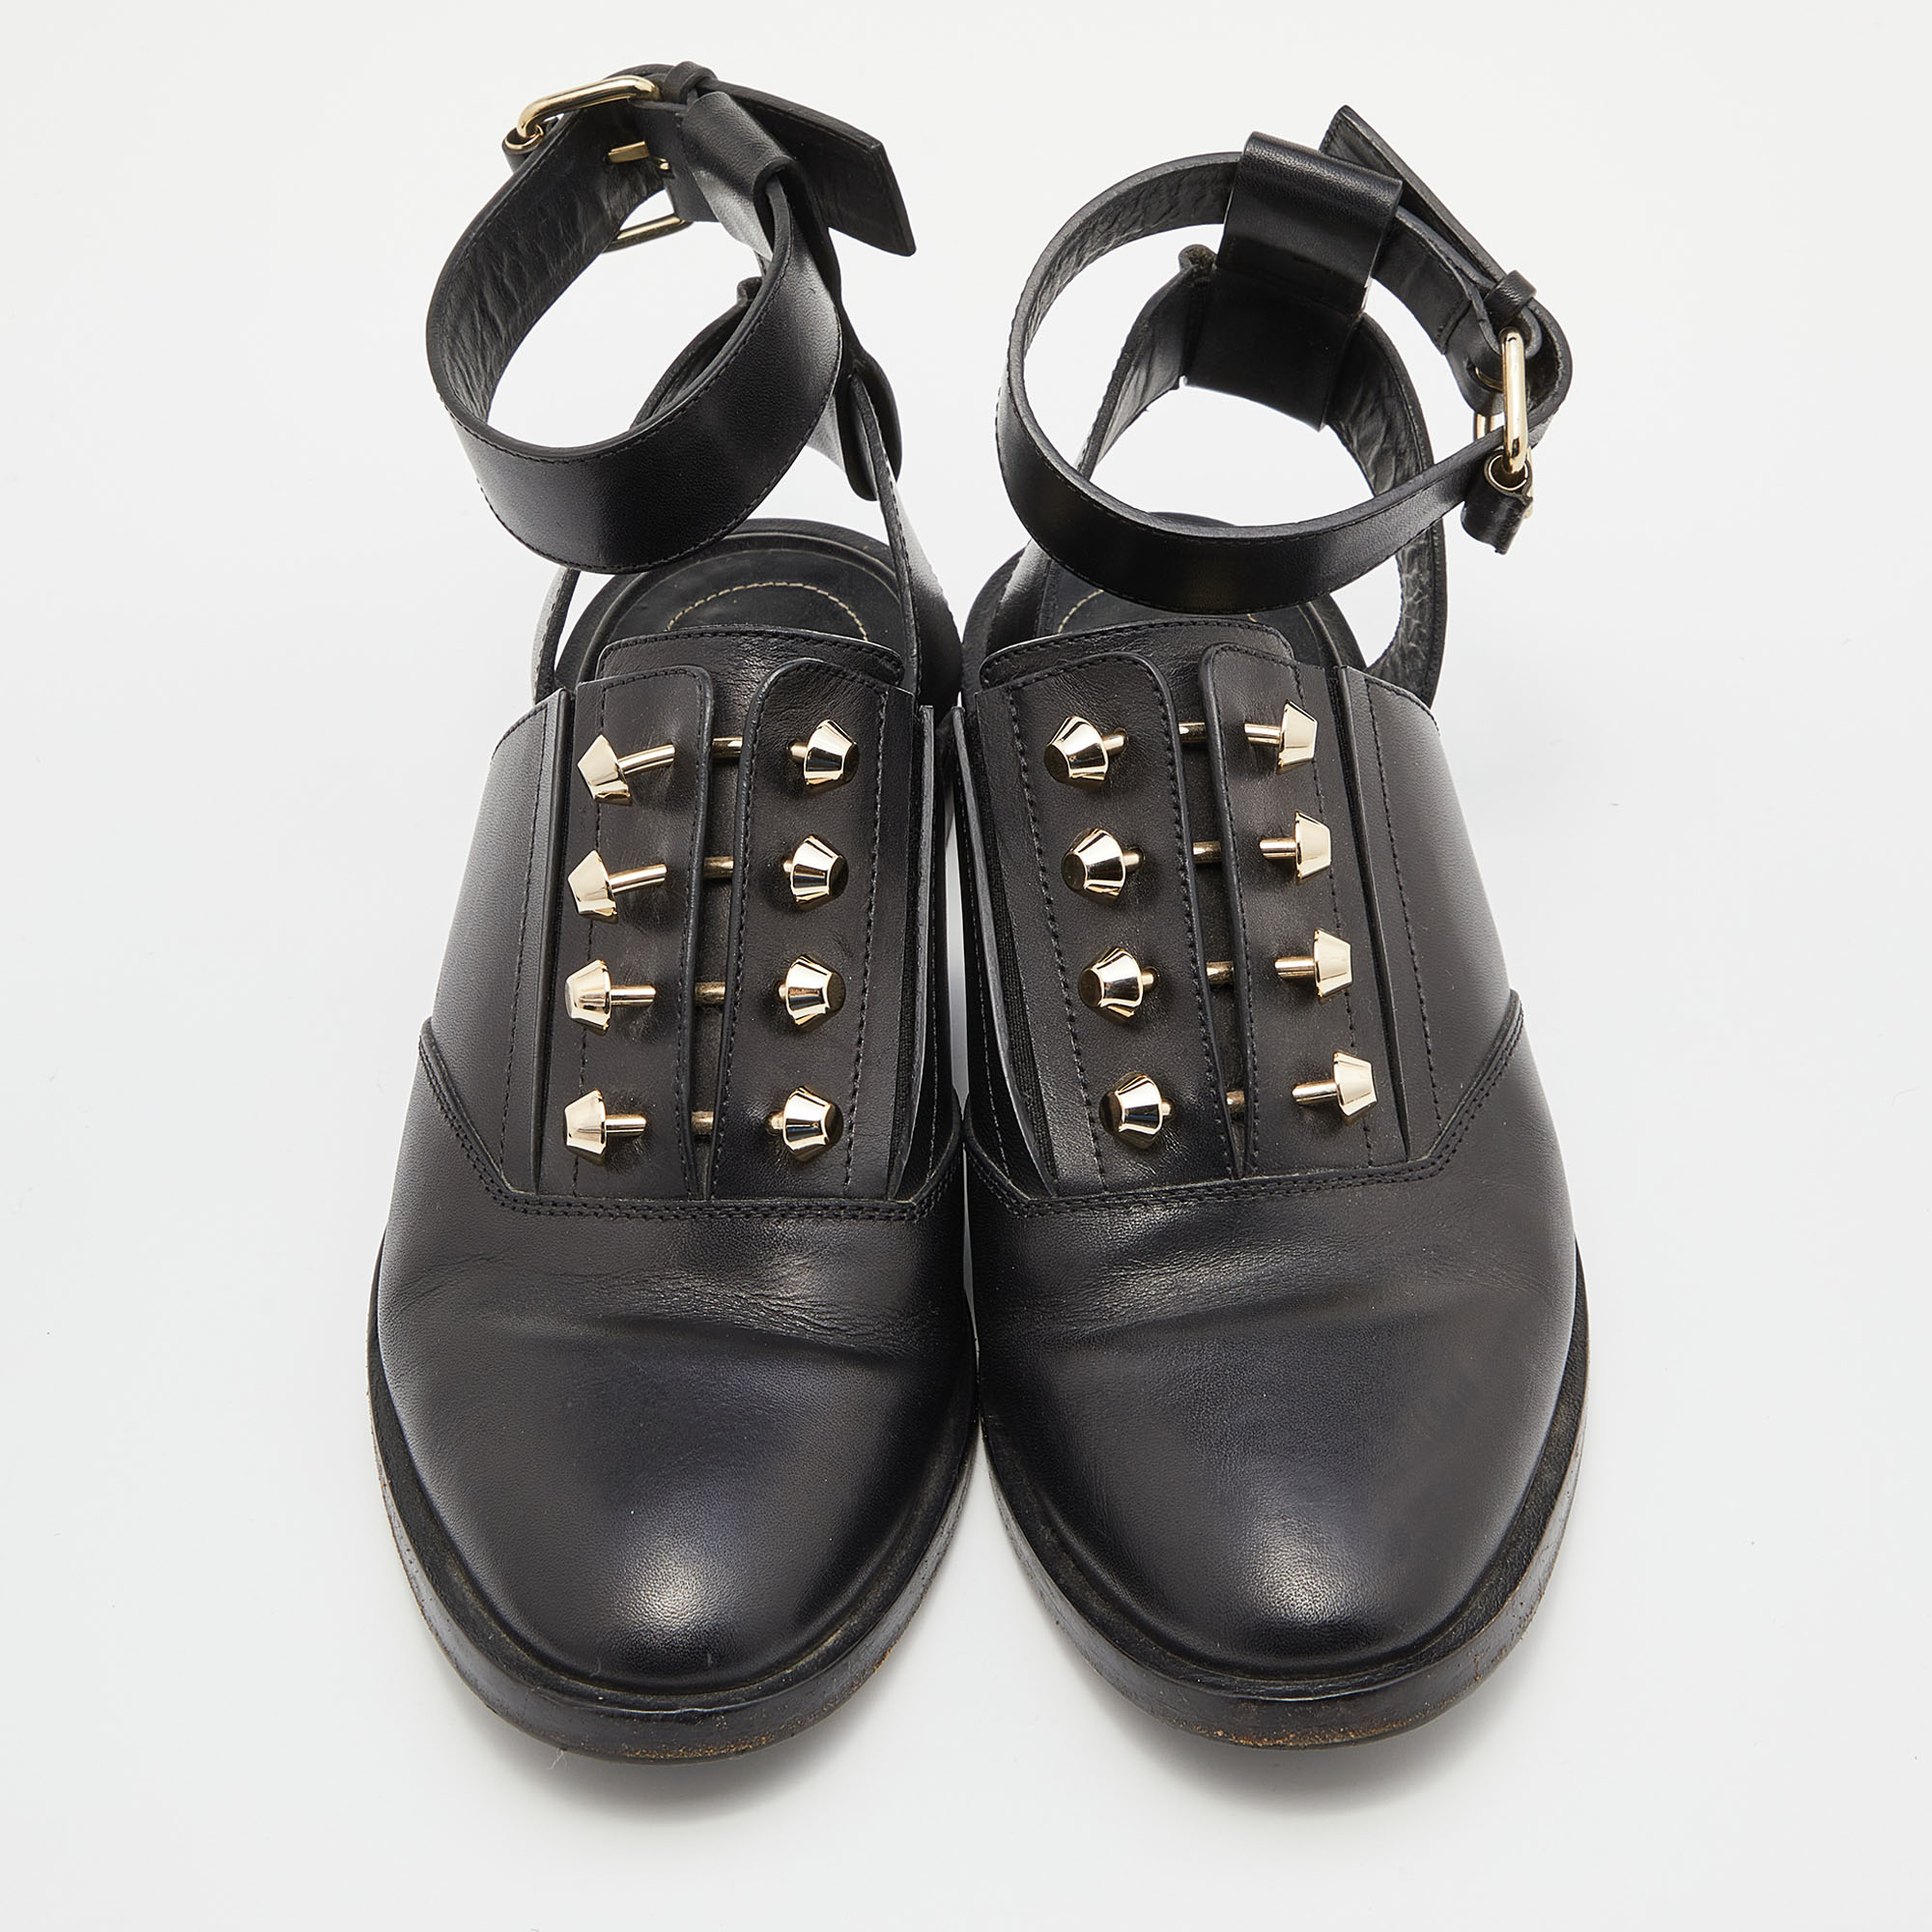 Balenciaga Black Leather Stud Ankle Strap Flat Mules Size 36